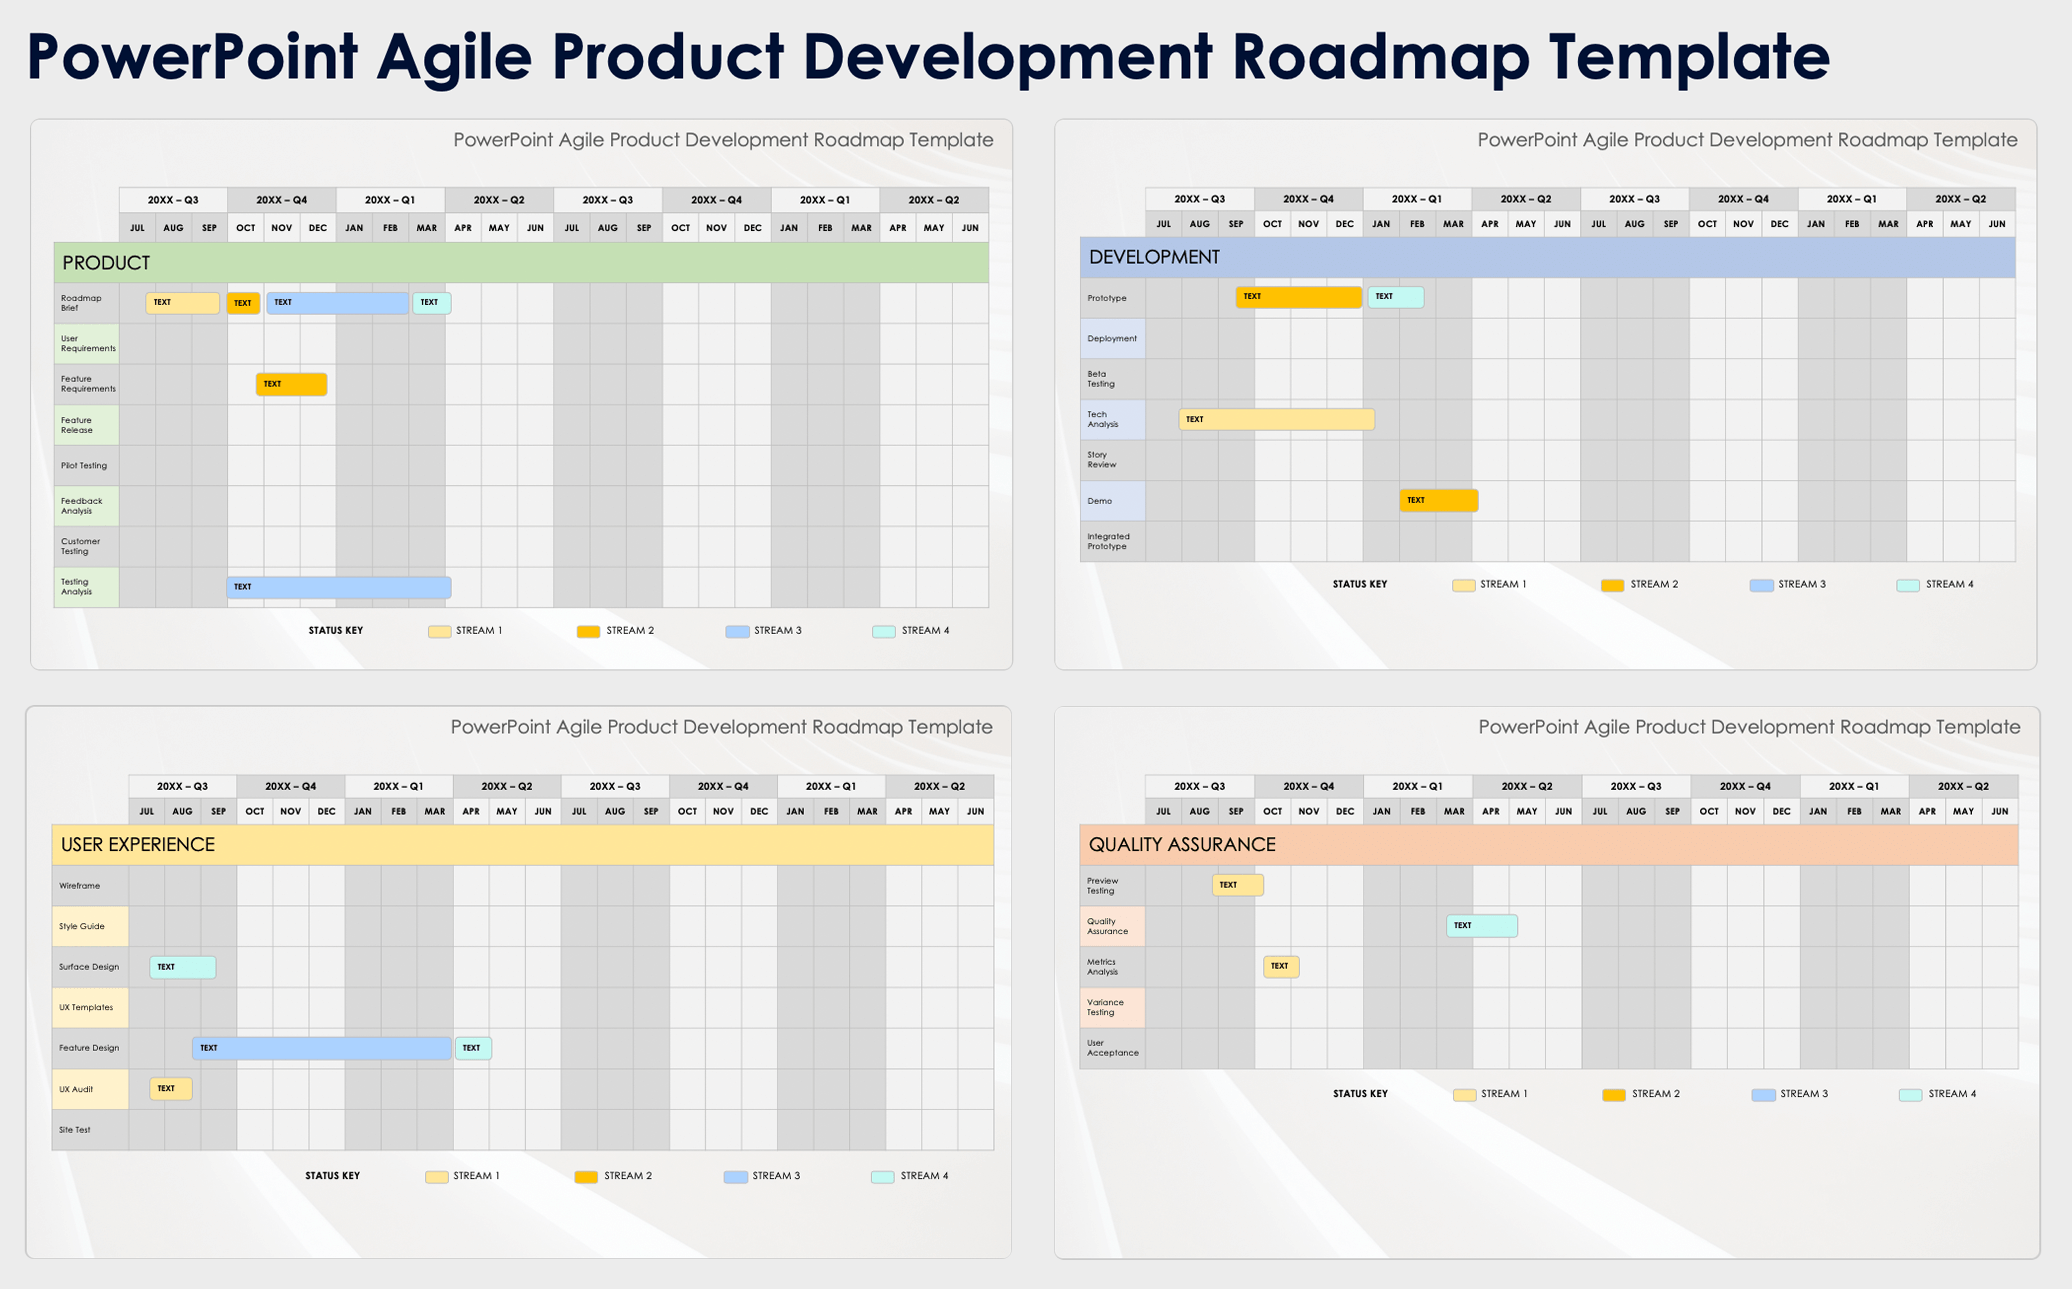 PowerPoint Agile Product Development Roadmap Template